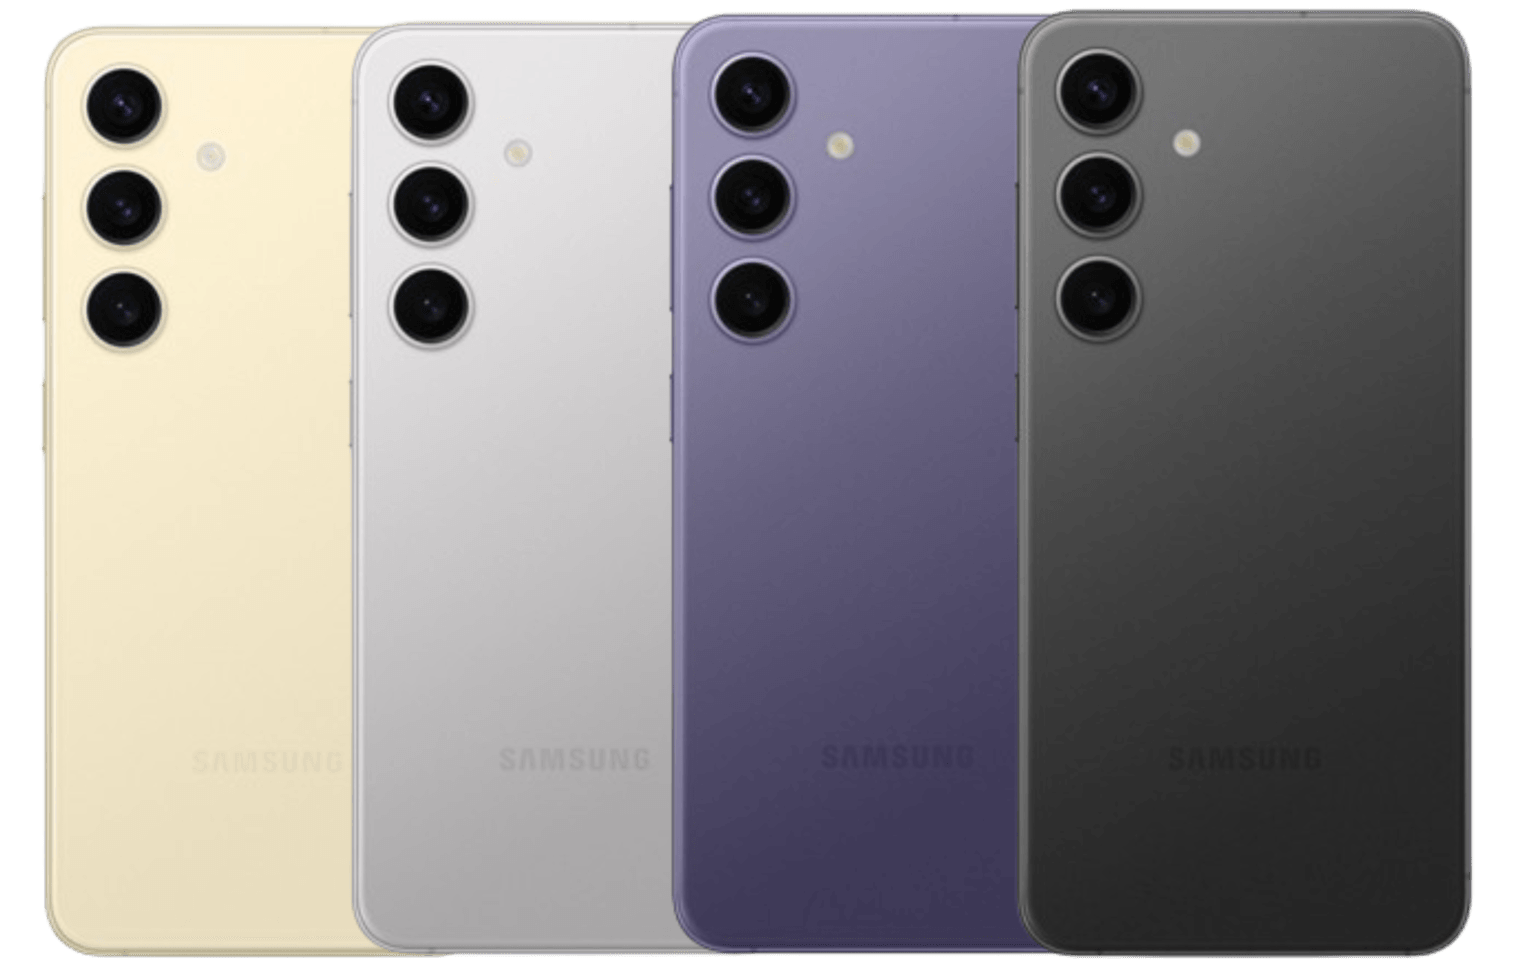 Samsung Galaxy S24/ S24+ 5G (256GB/512GB) - Mainz Empire Pte Ltd